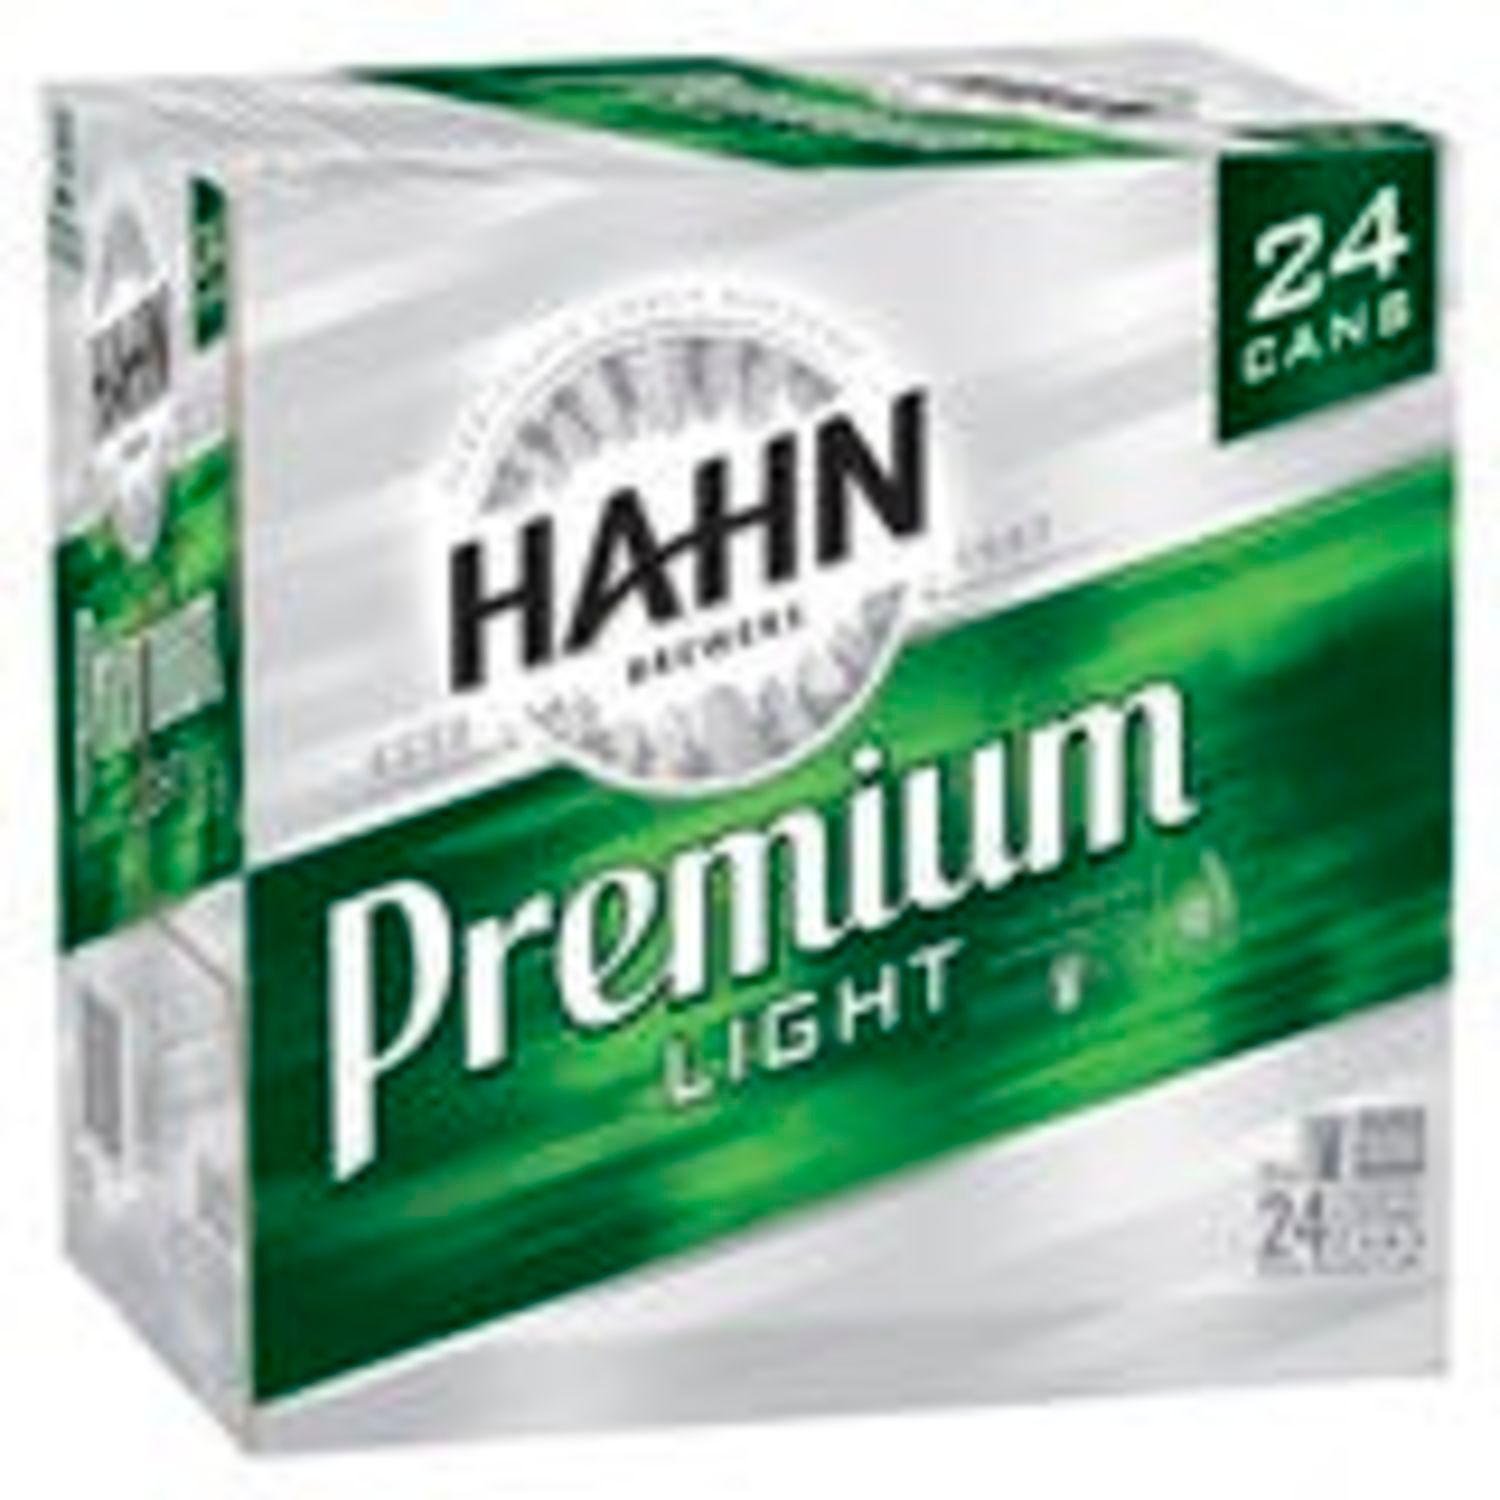 Hahn Premium Light Can 375mL 24 Pack Cube